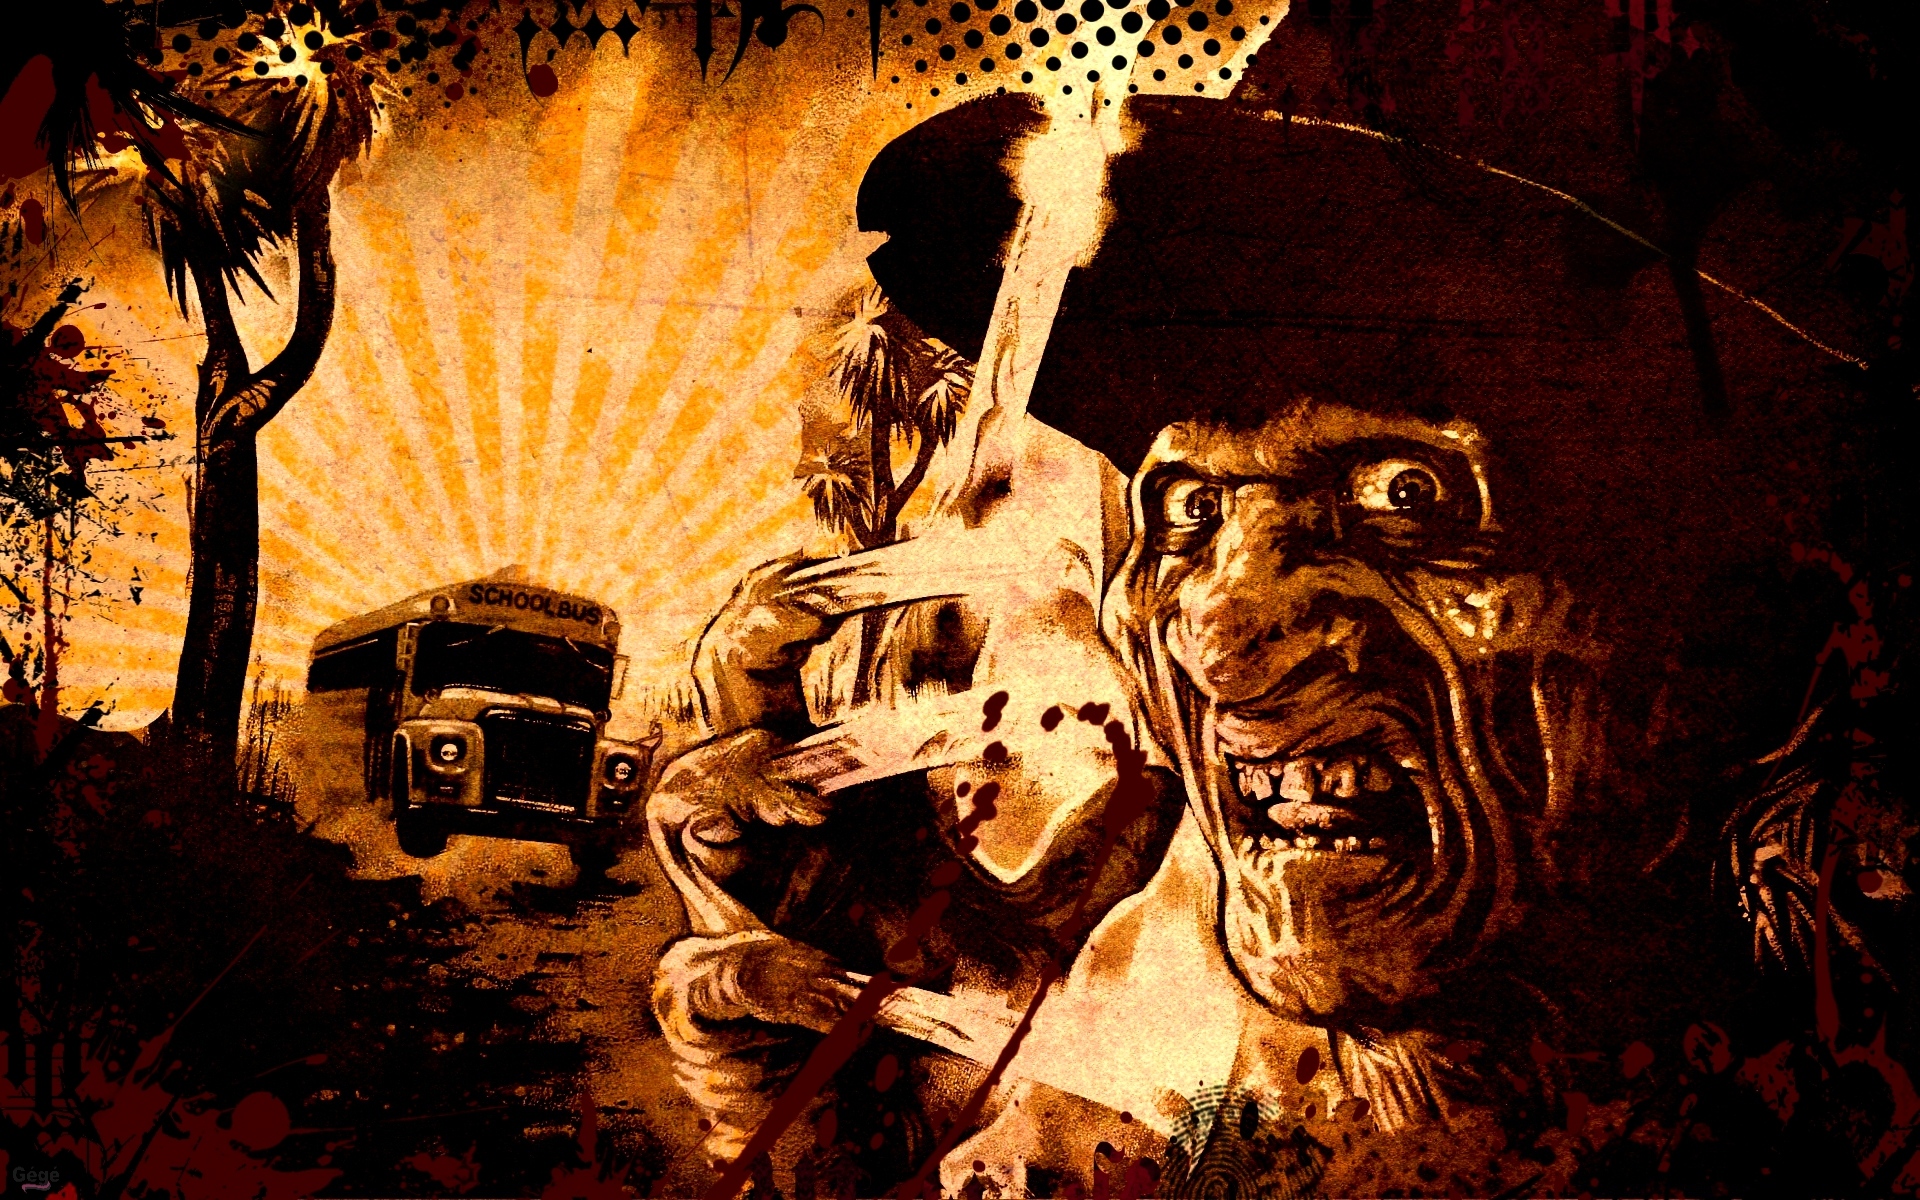 A Nightmare on Elm Street Wallpaper by Thekingblader995 on DeviantArt